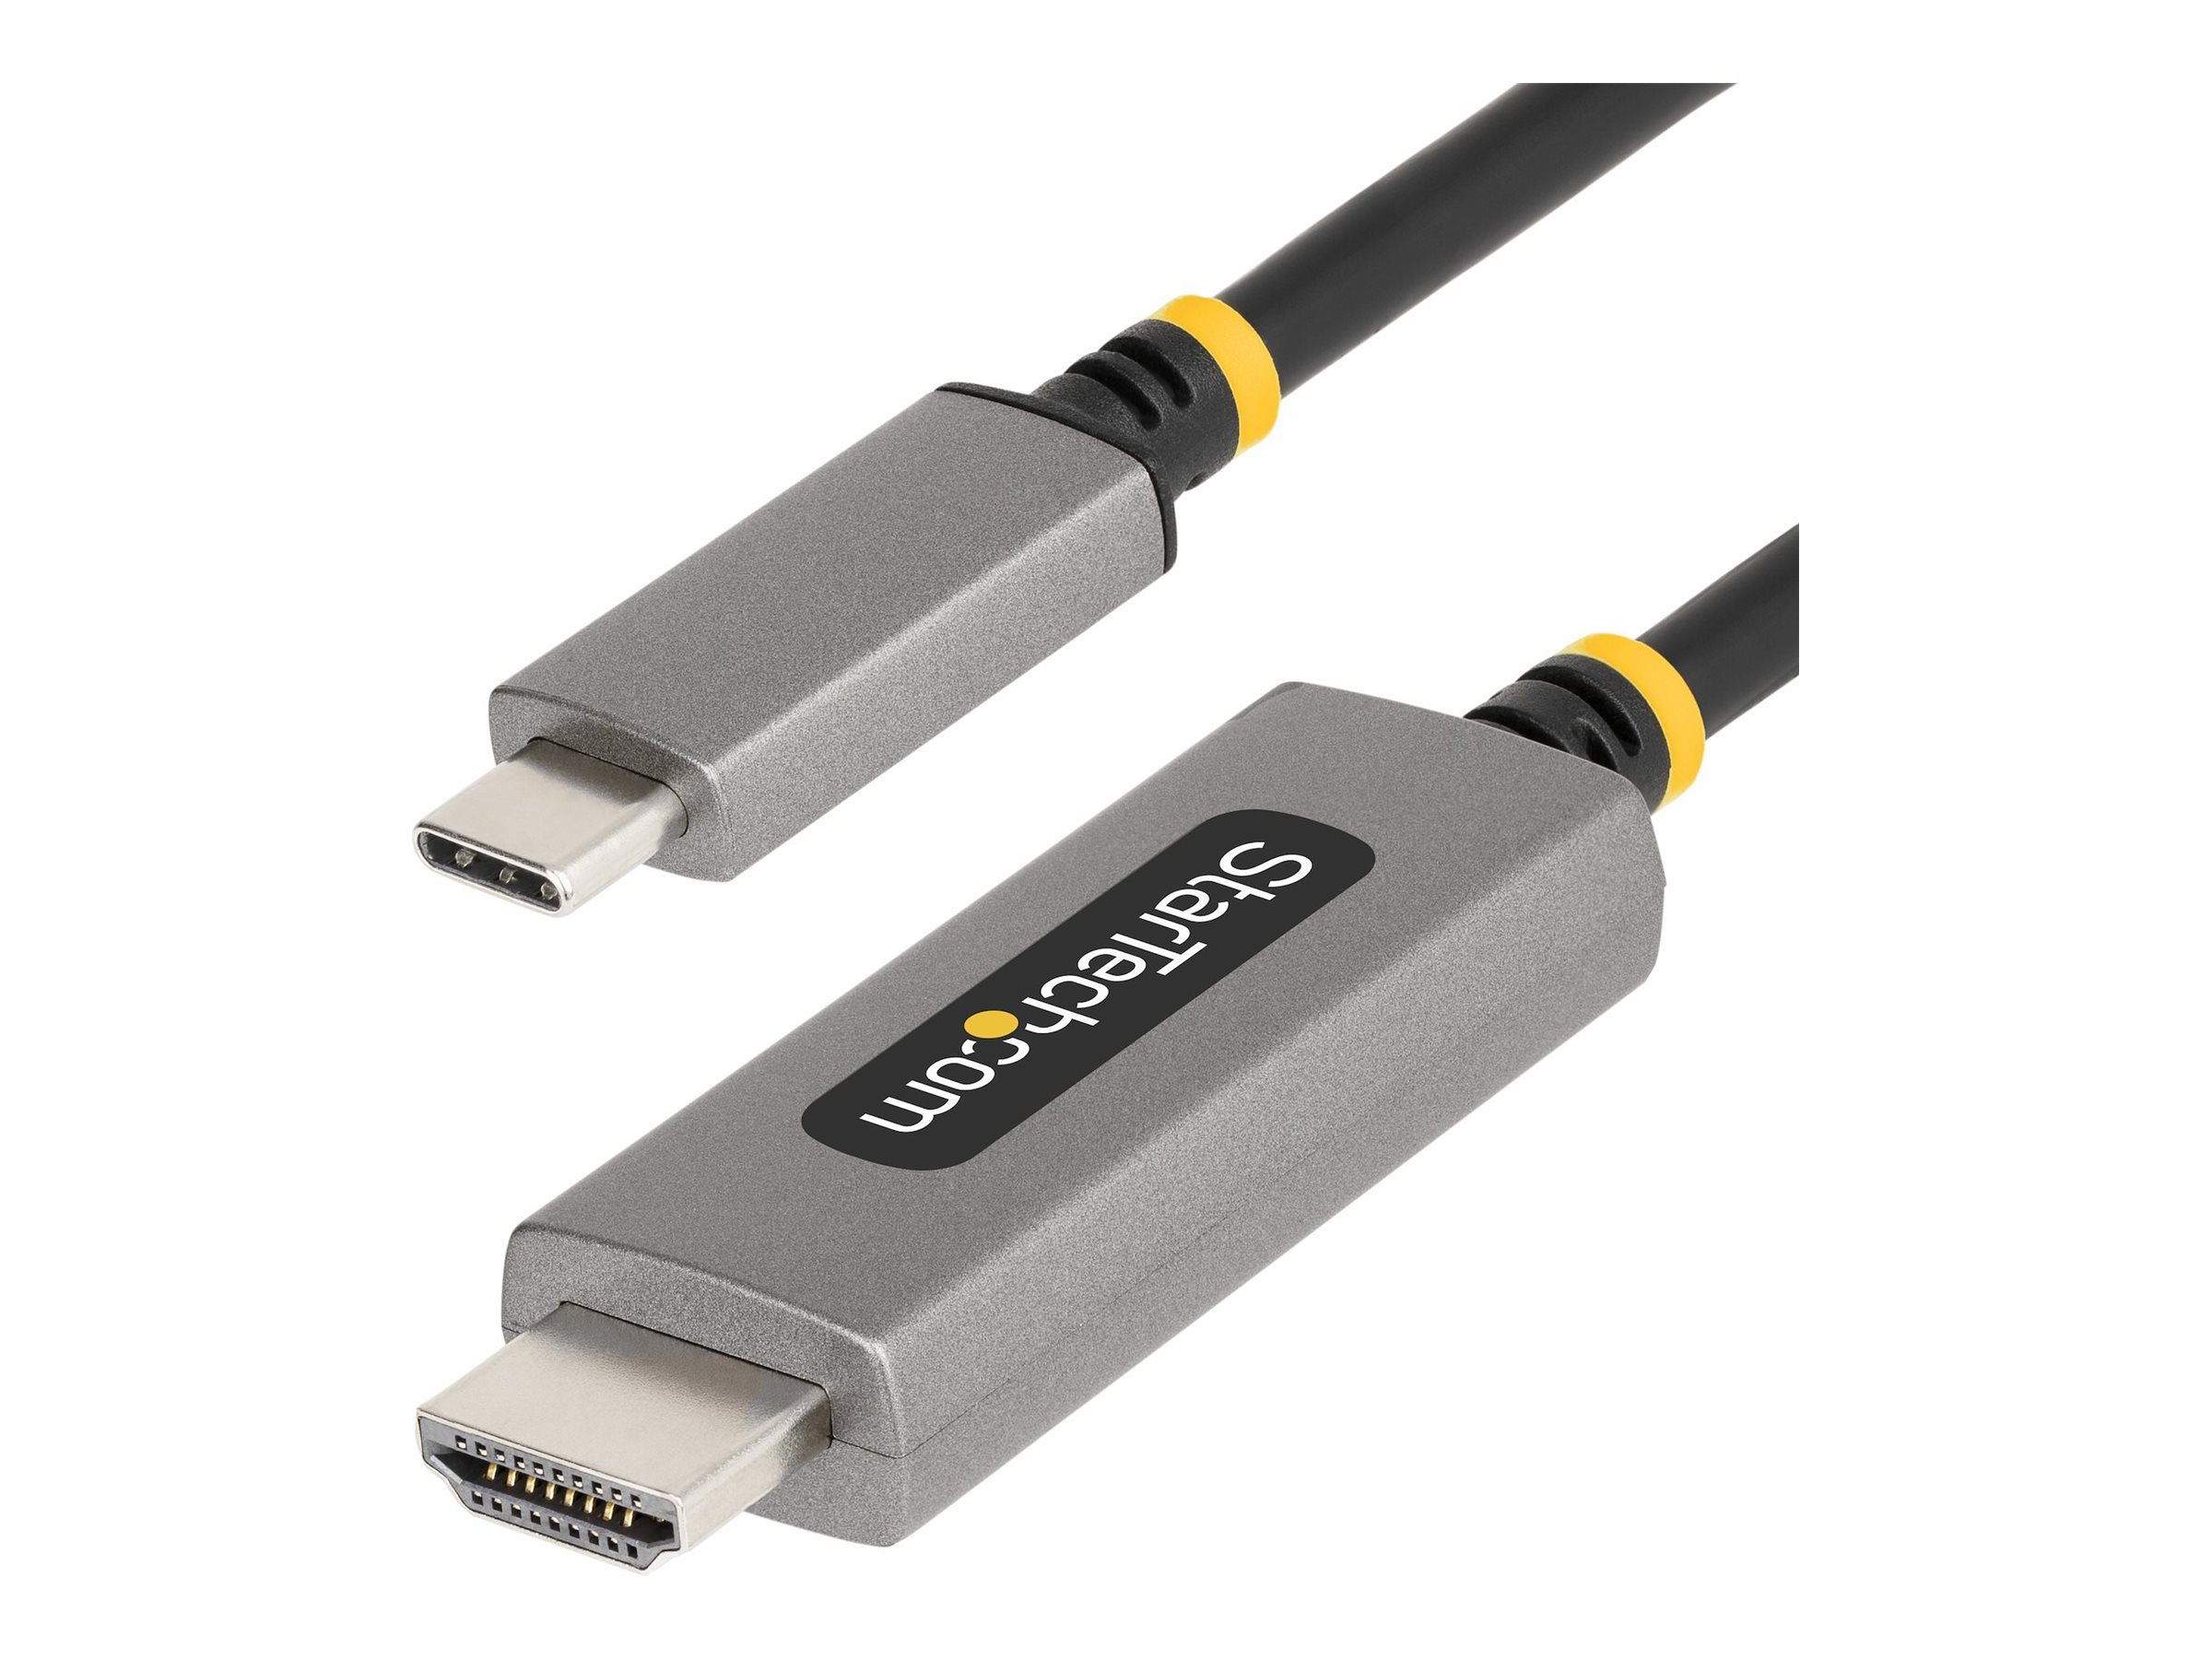 StarTech.com 10ft (3m) USB-C to HDMI Adapter Cable, 8K 60Hz, 4K 144Hz, HDR10, USB Type-C to HDMI 2.1 Video Converter Cable, USB-C DP Alt Mode/USB4/Thunderbolt 3/4 Compatible - USB-C Laptop to HDMI Monitor (136B-USBC-HDMI213M) - Câble adaptateur - 24 pin USB-C mâle pour HDMI mâle - 3 m - gris sidéral - actif, support pour 8K60Hz, support pour 4K144Hz - 136B-USBC-HDMI213M - Accessoires pour téléviseurs